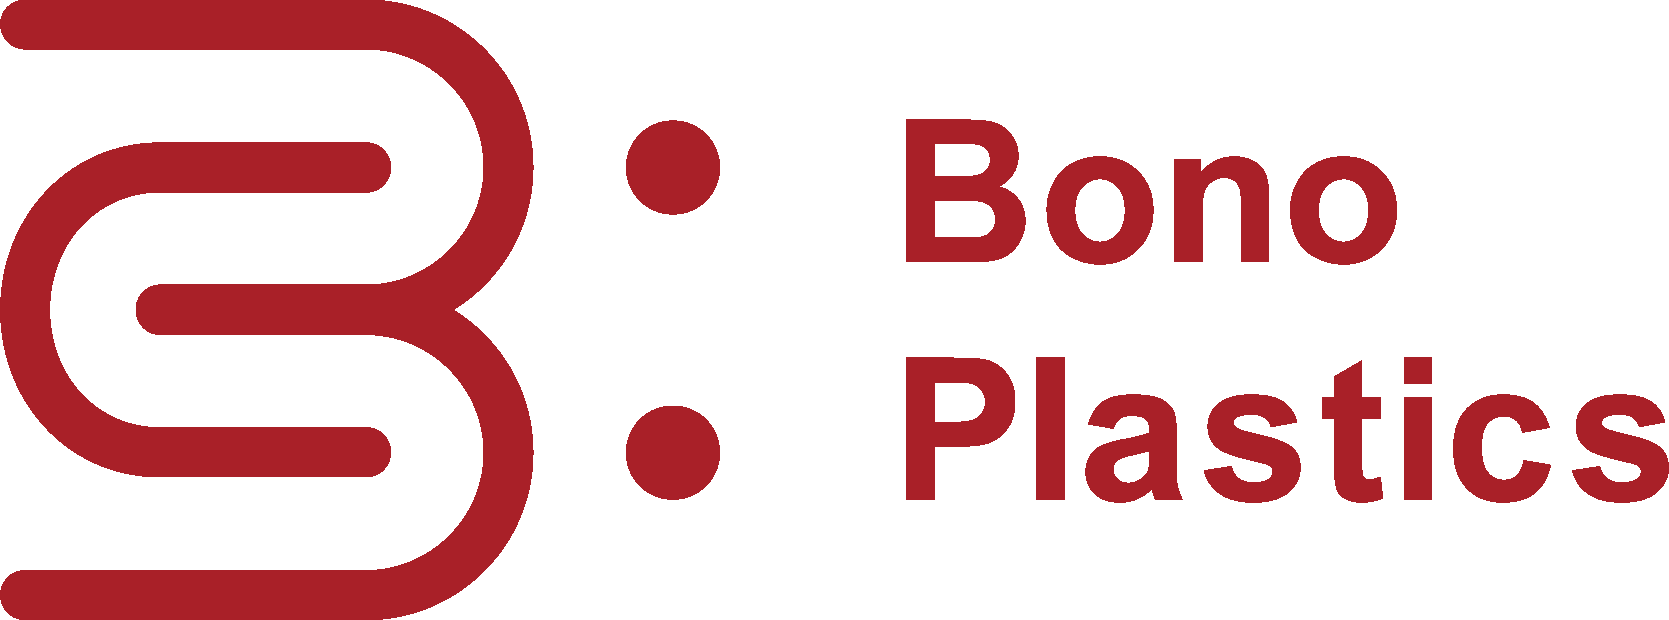 Bono Plastics Logo English